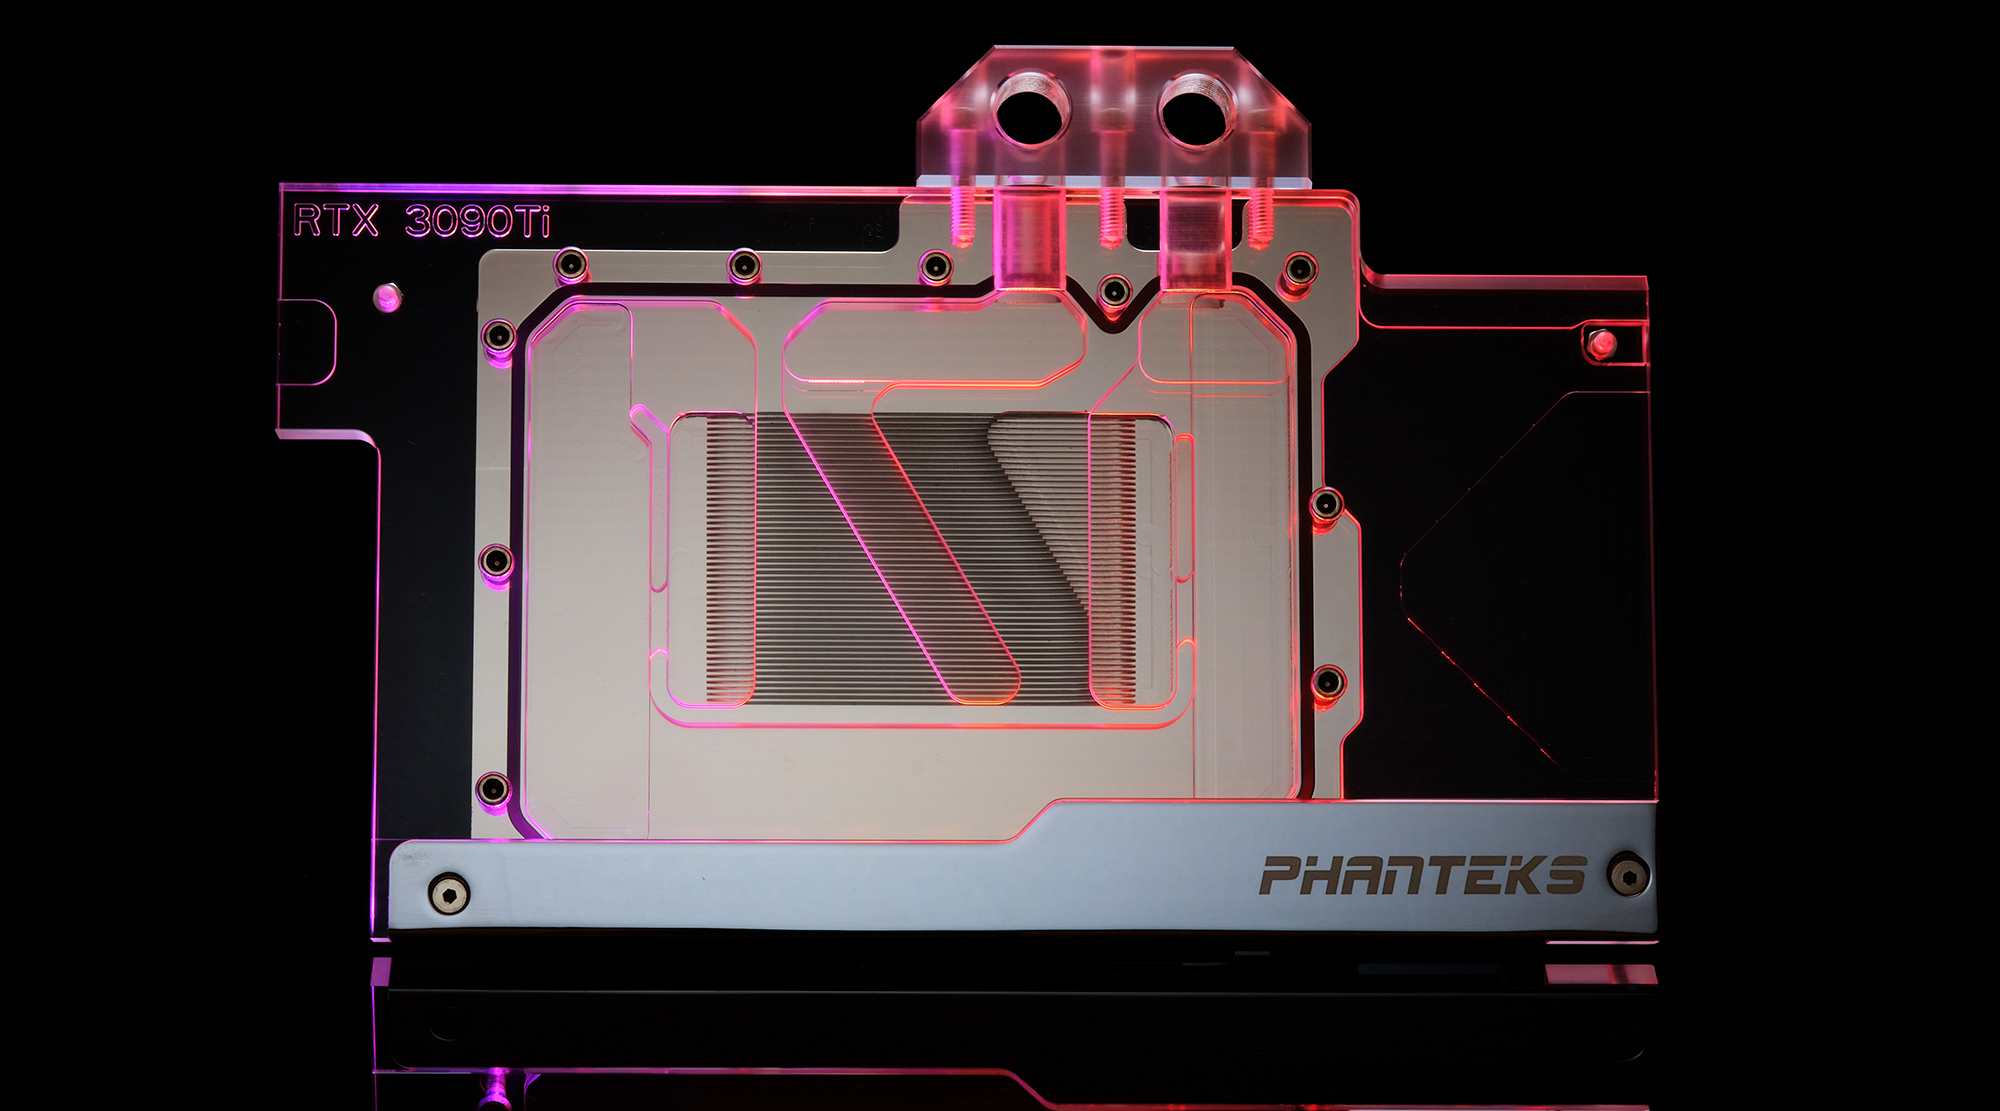 Phanteks launches RTX 3090 Ti Aorus |